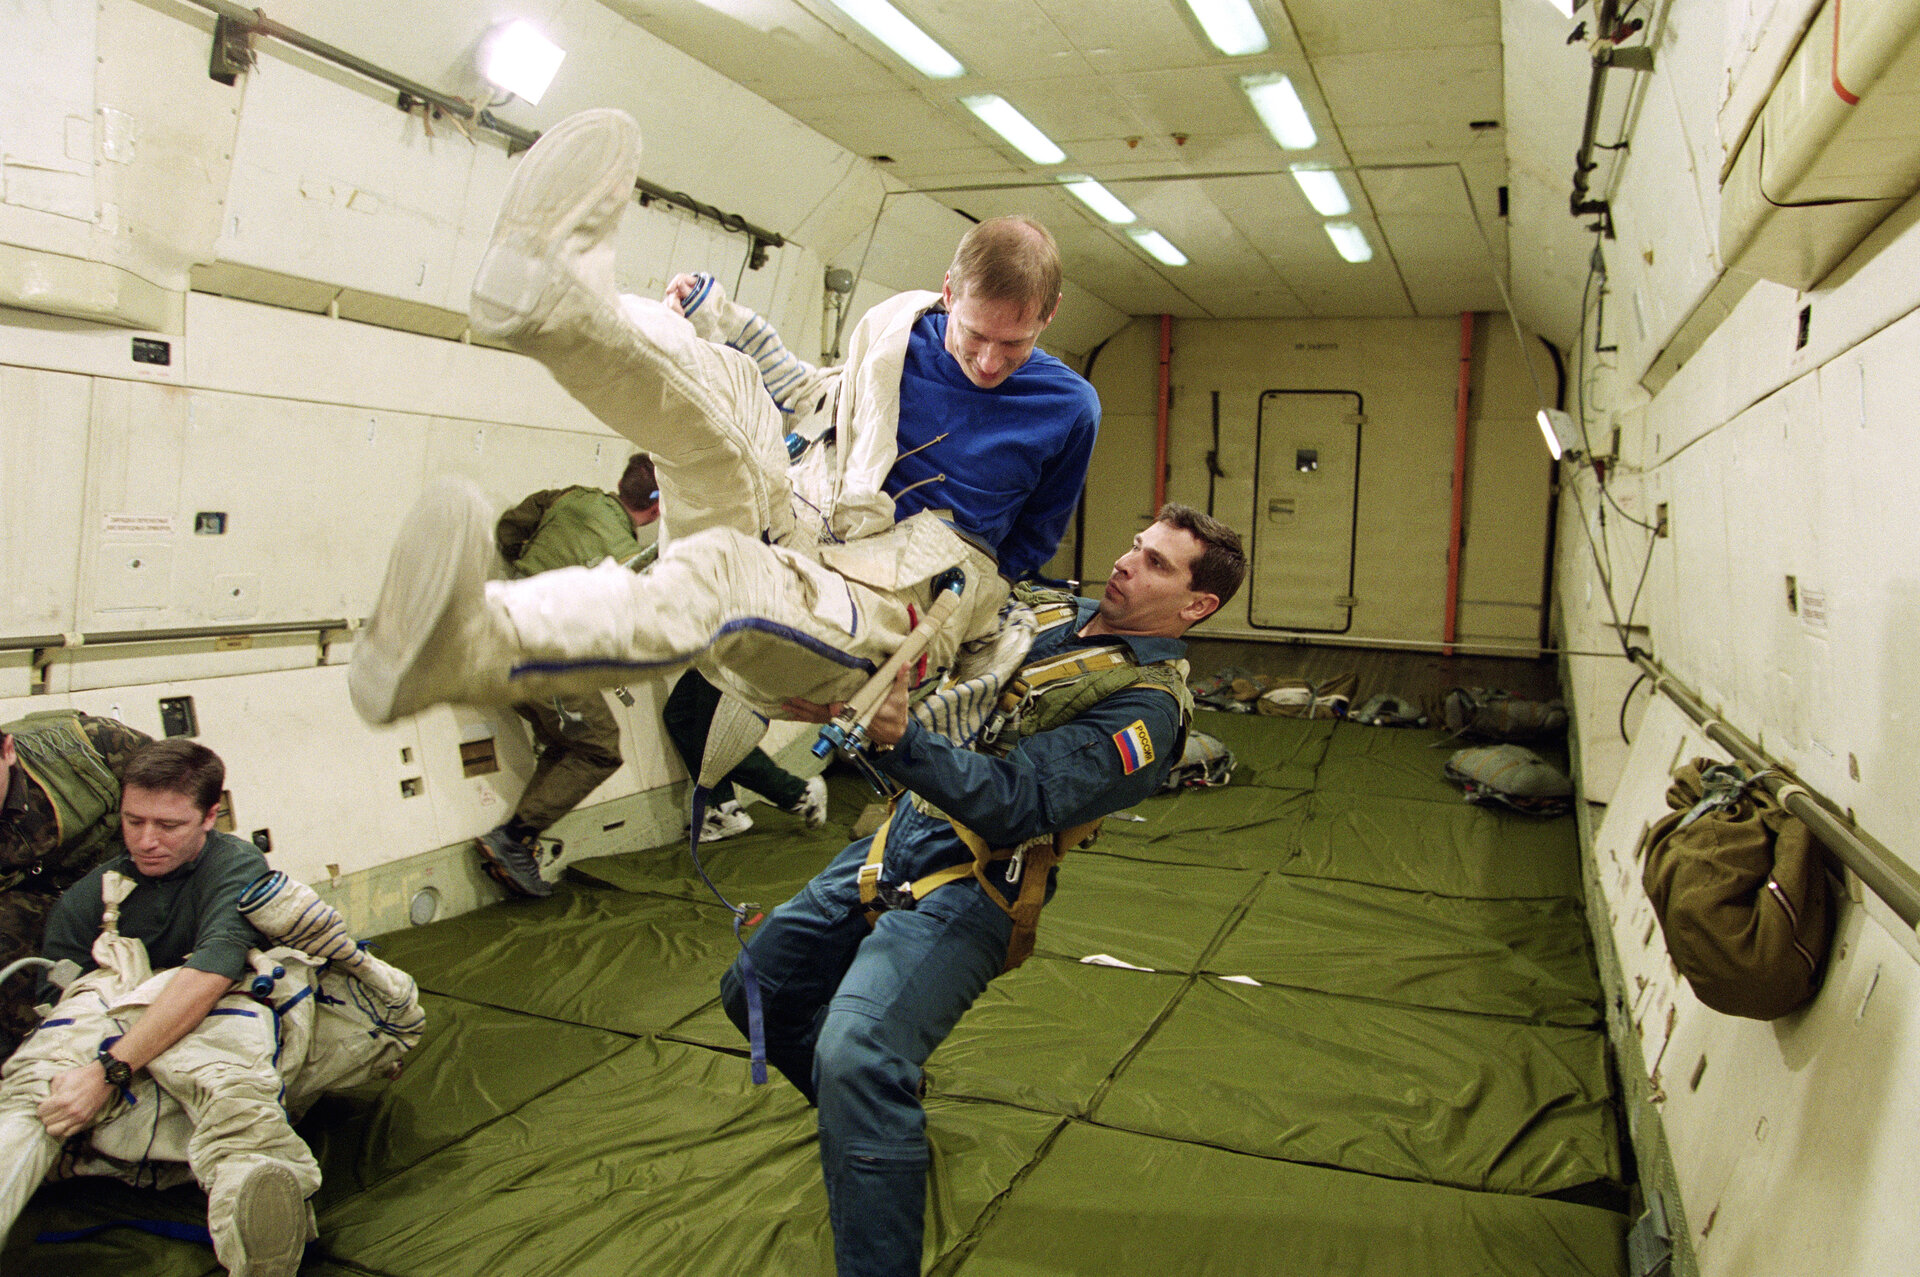 De Winne and Vittori during a zero gravity flight